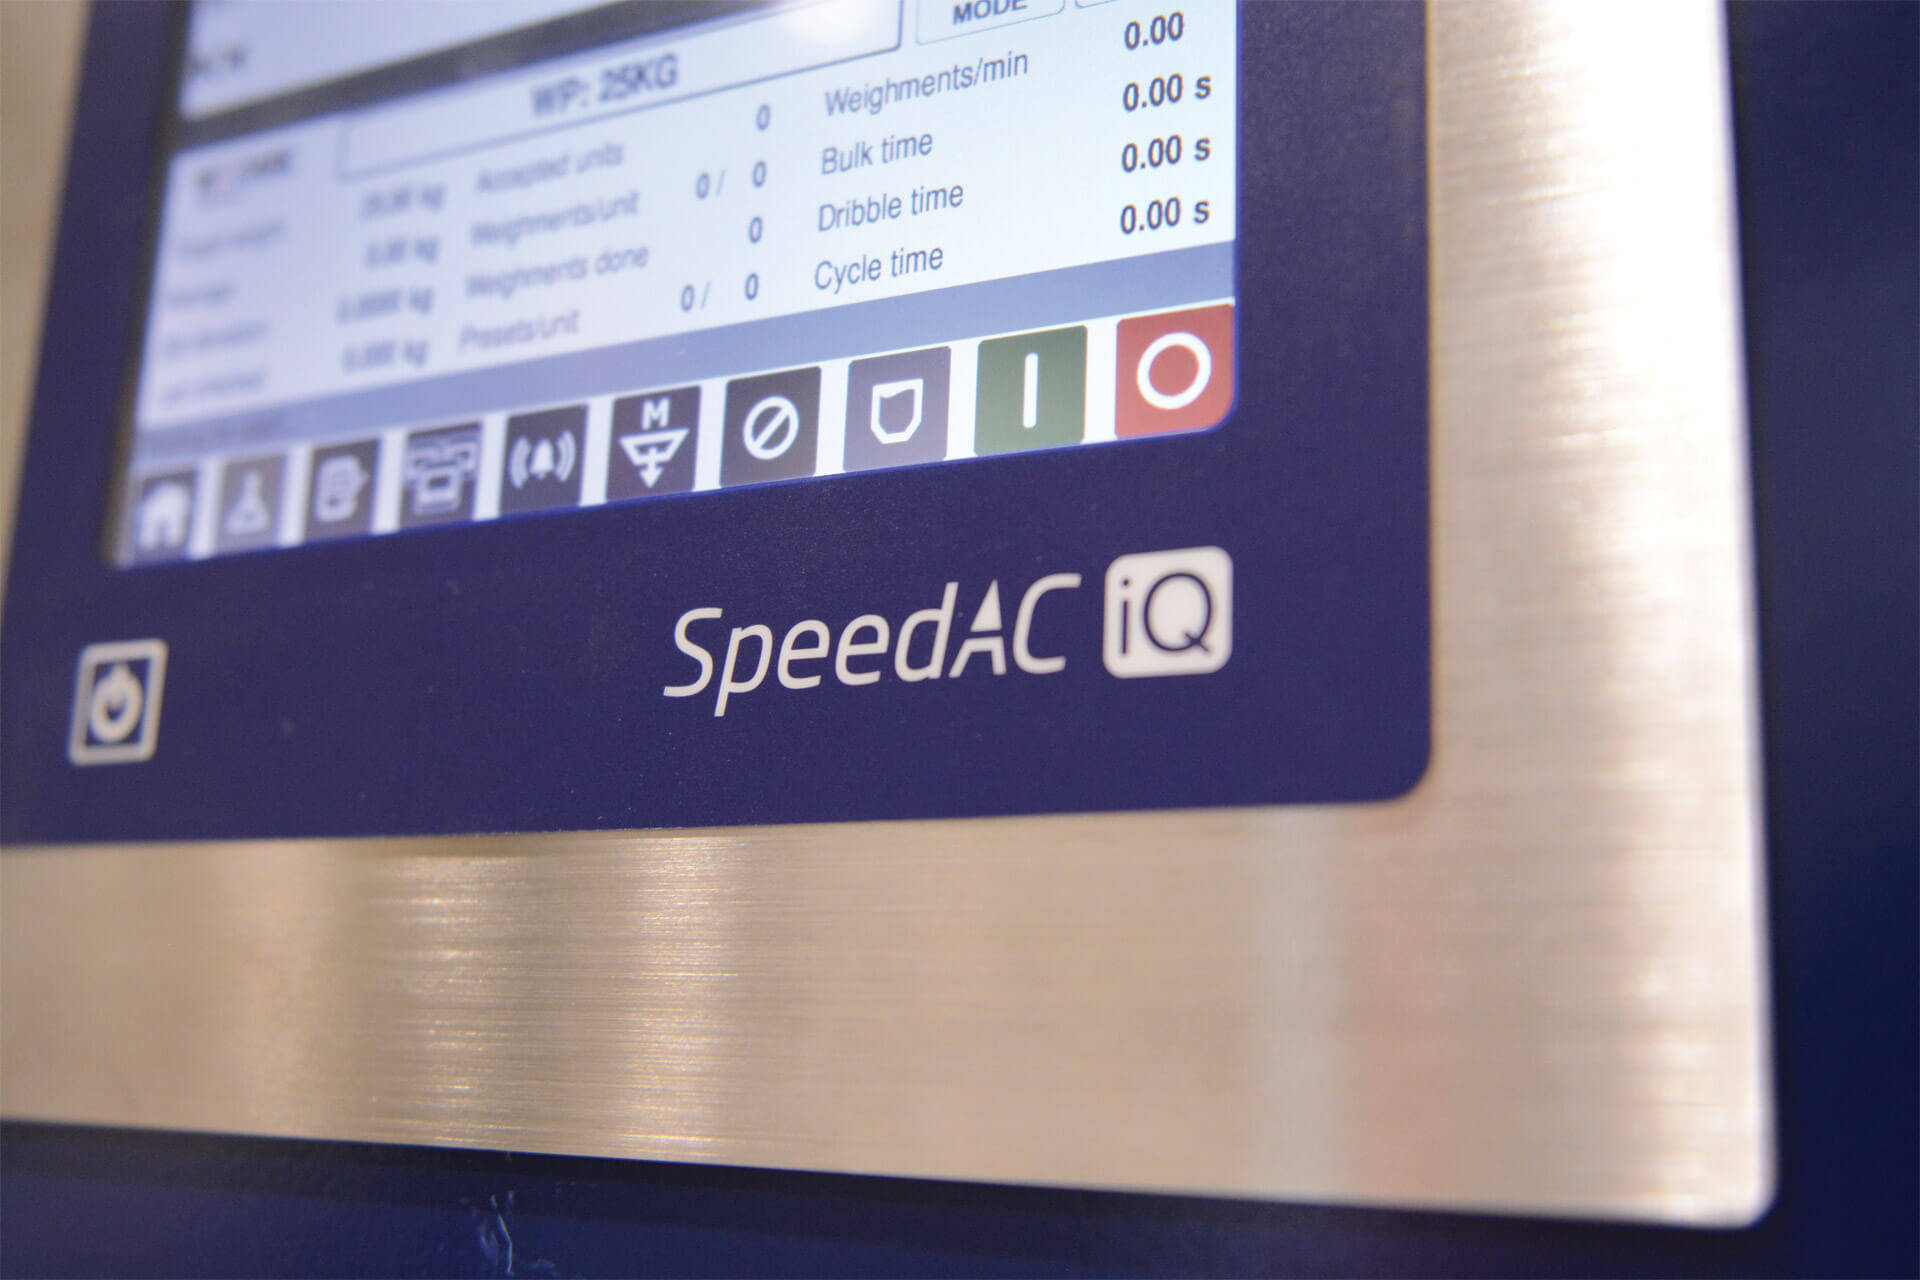 SpeedAc iQ weigher interface close up